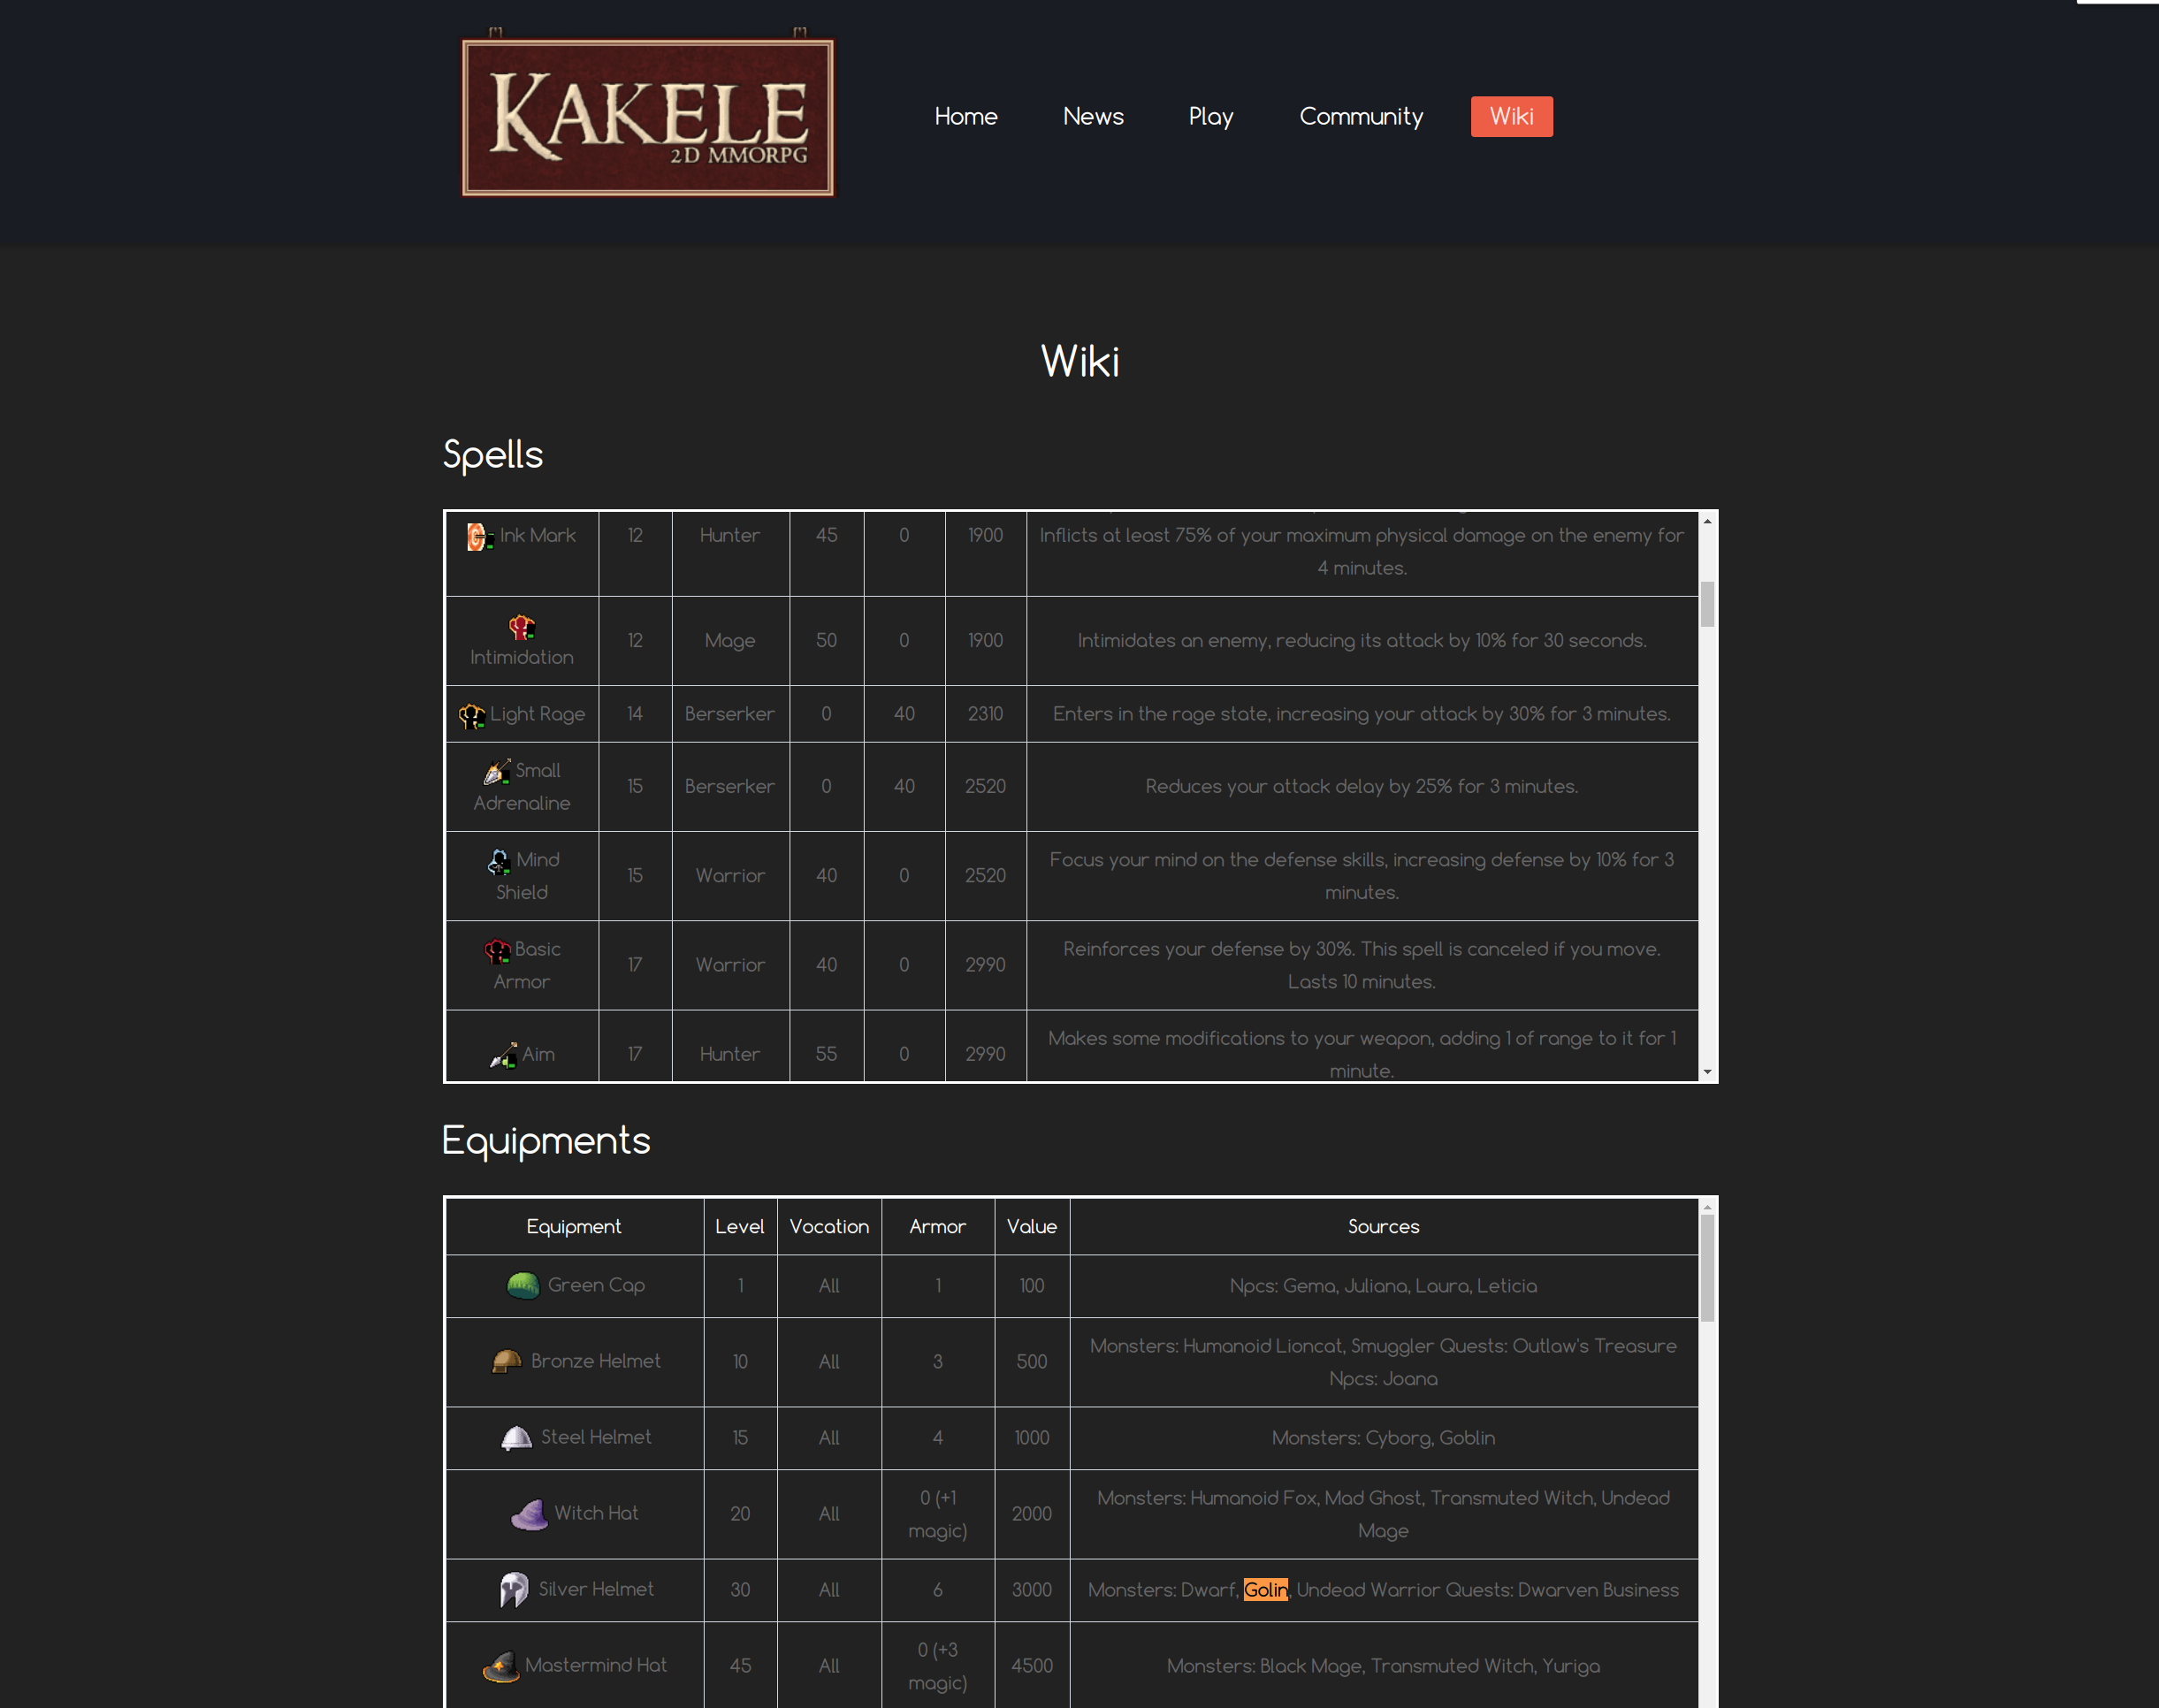 Kakele Online - MMORPG download the last version for ipod